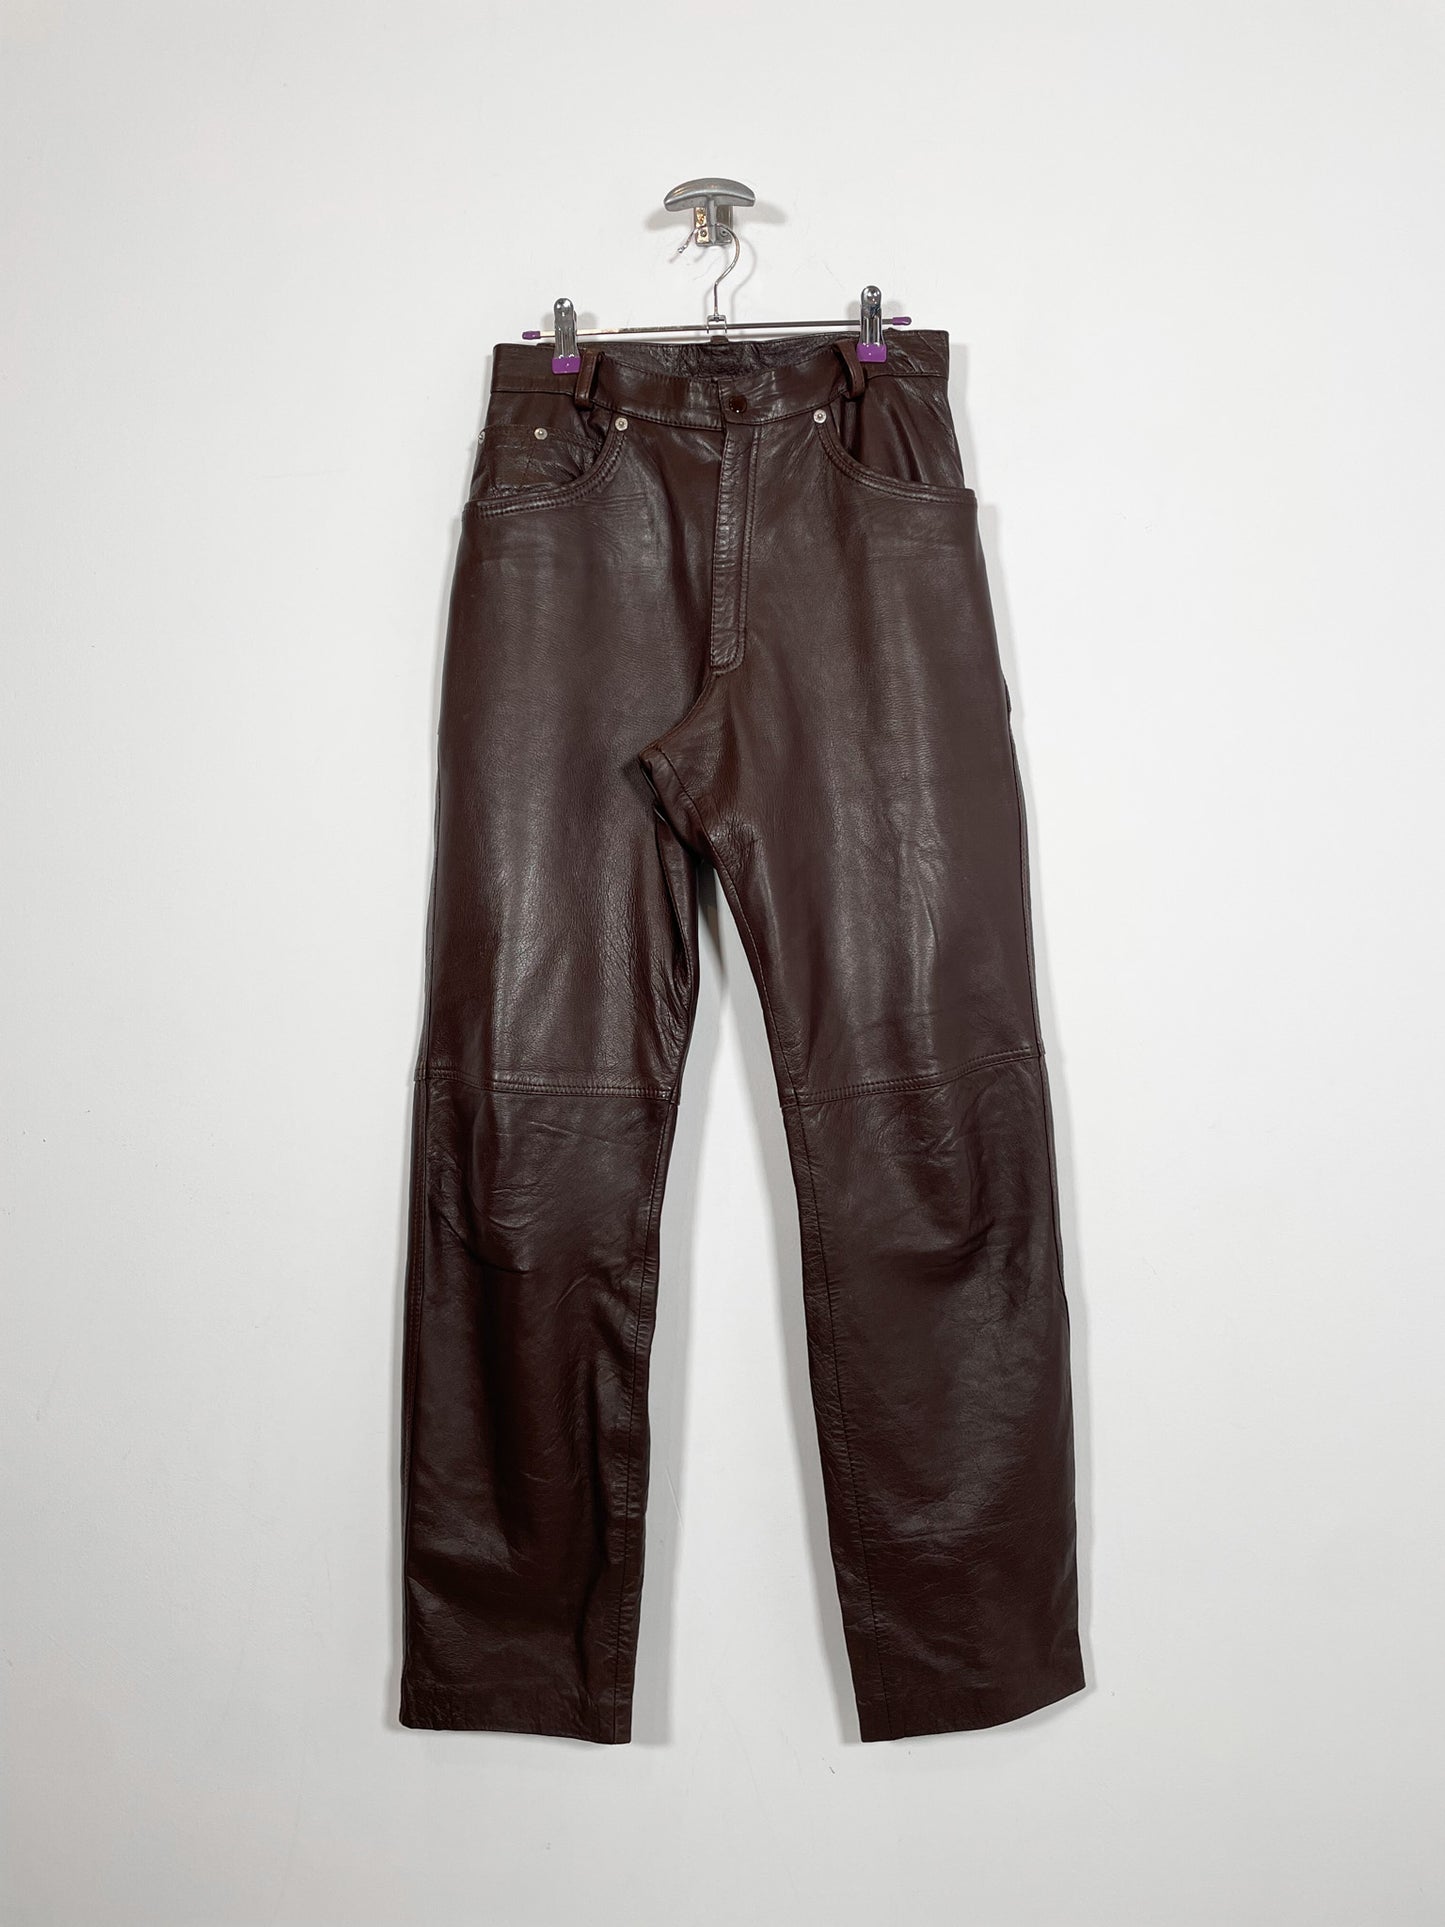 Pantalón de cuero marrón - Talla 38 - Caramelo Vintage